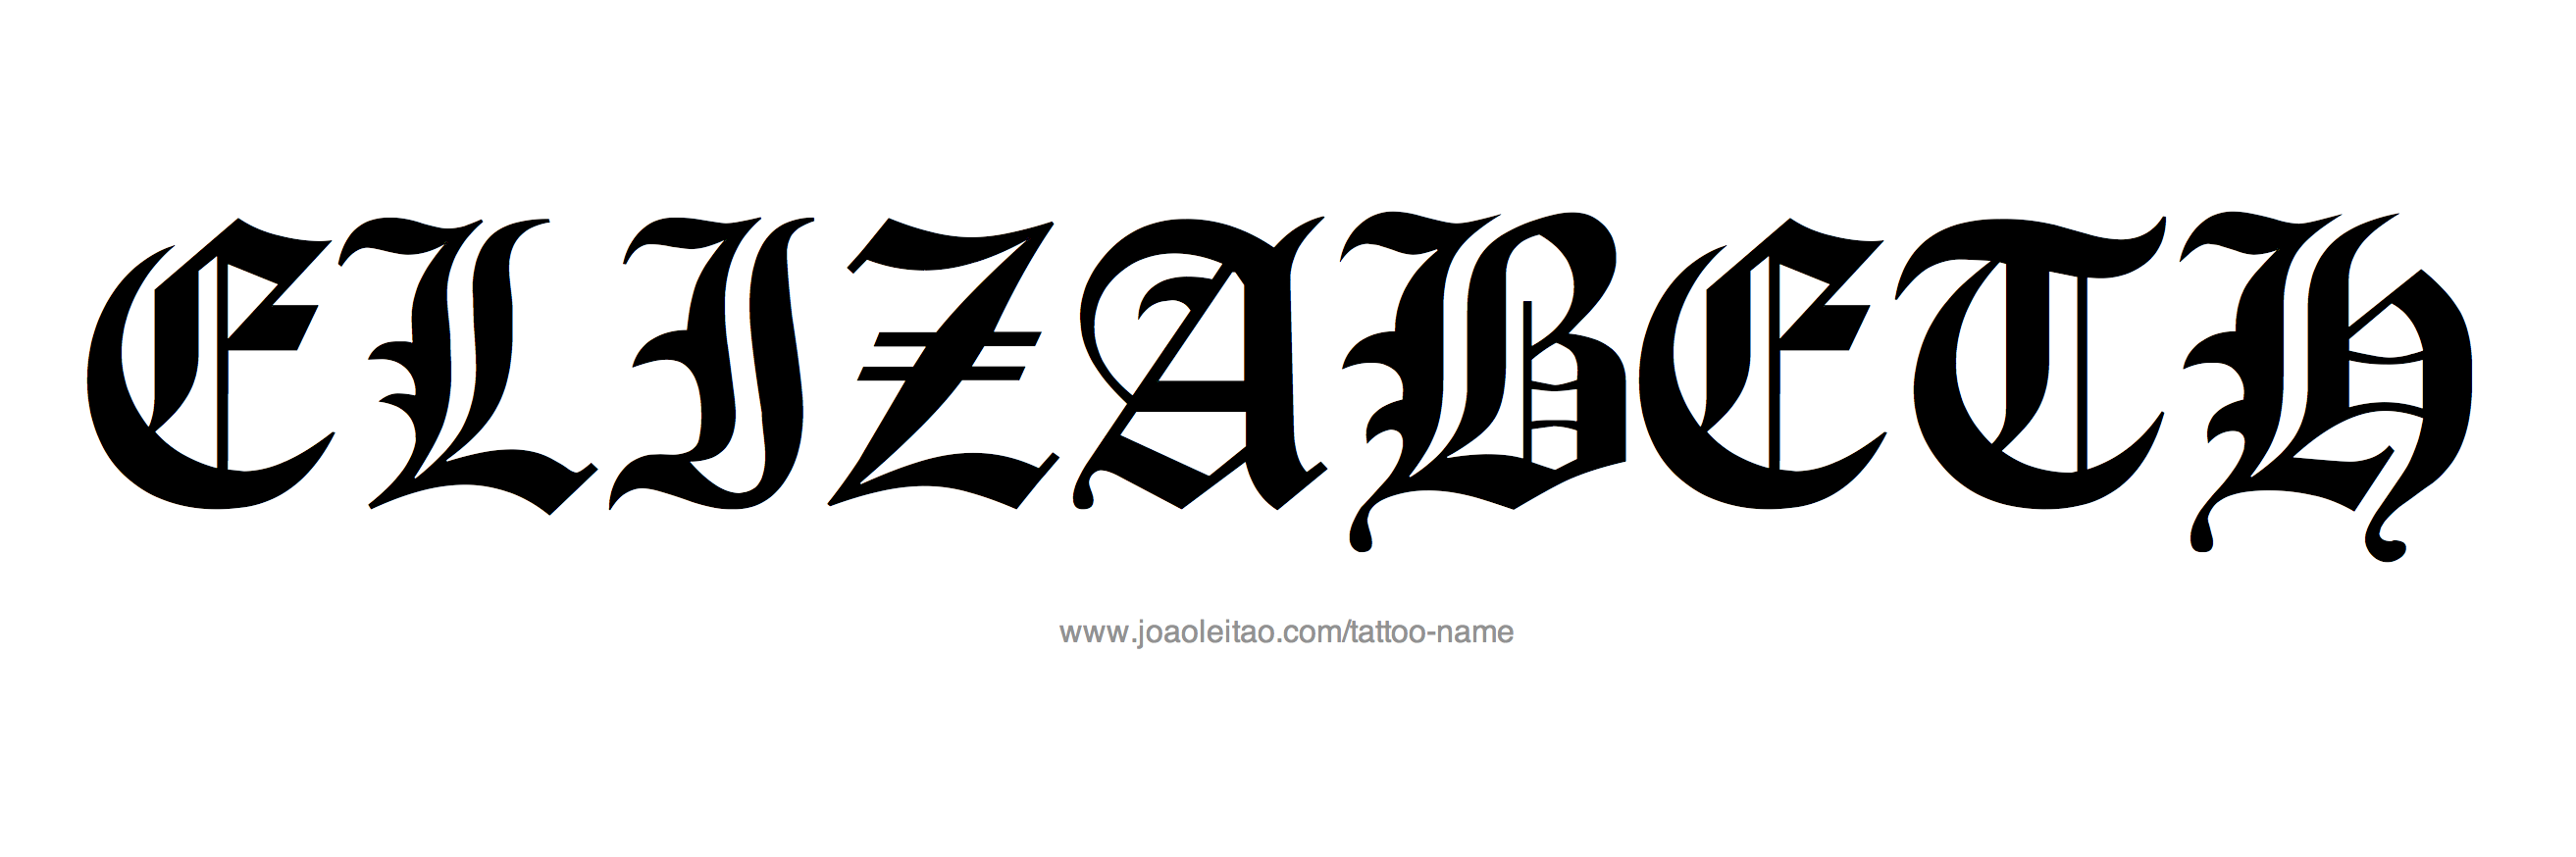 Tattoo Design Name Elizabeth 